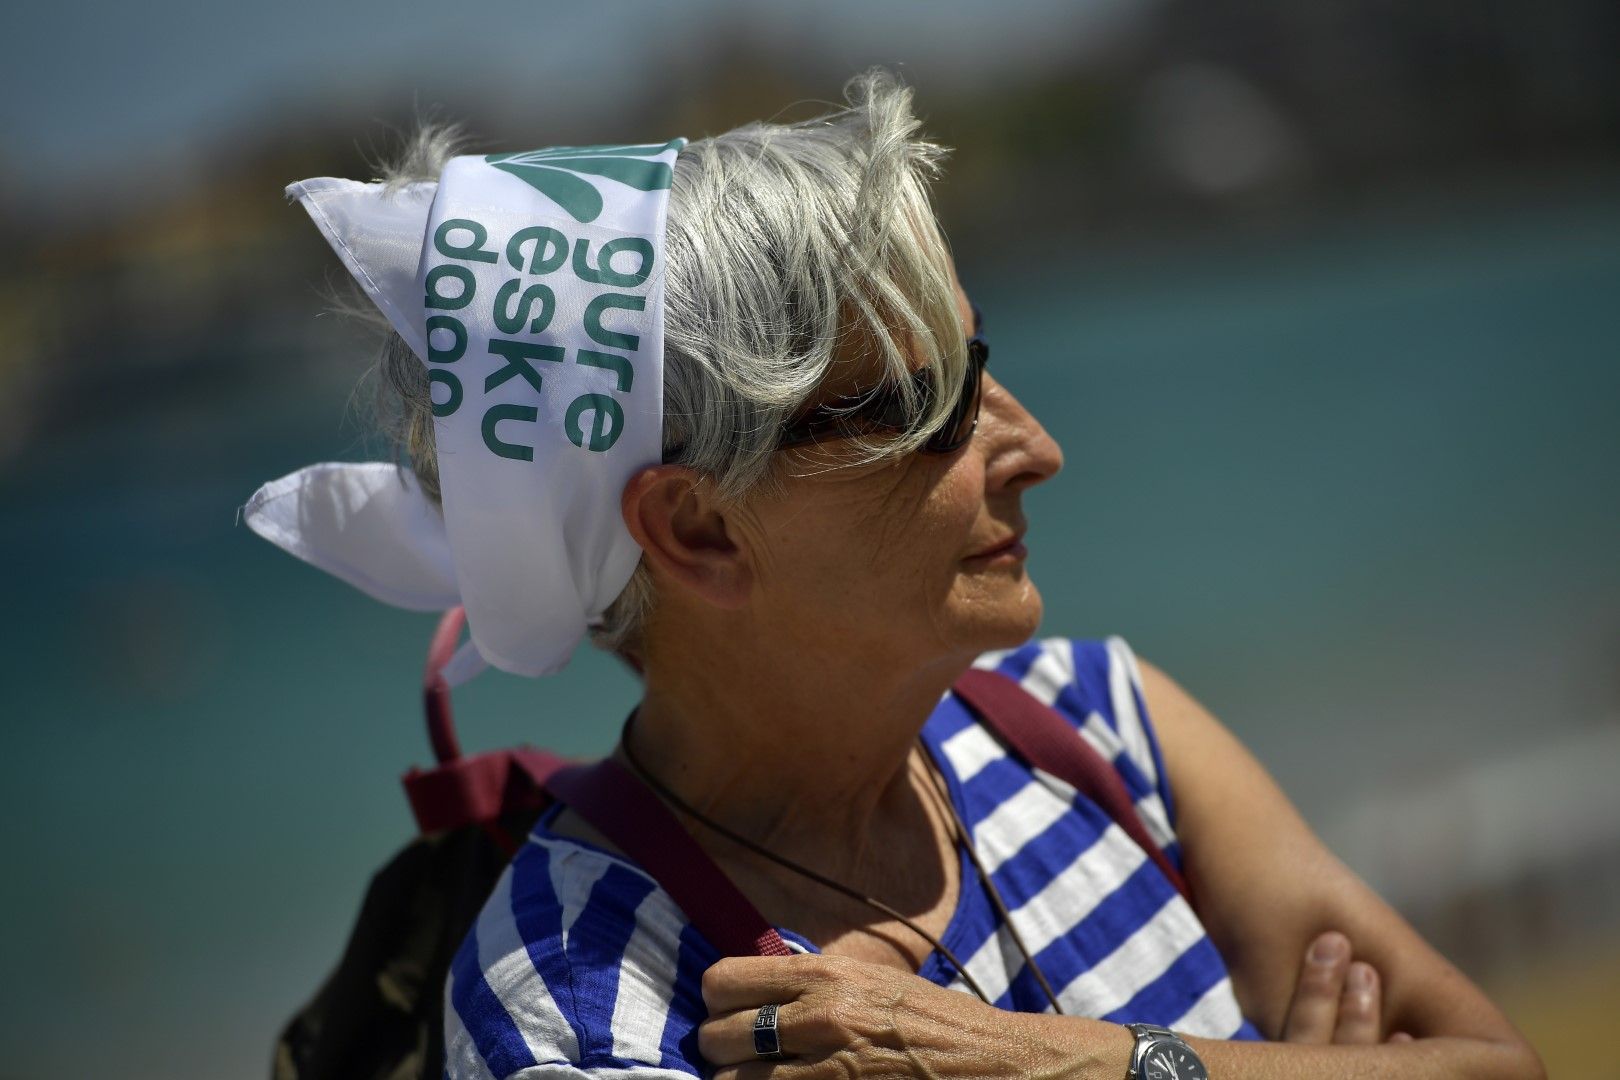 Жена носи шапка, на която на баски пише:  "Наше право е да решим". Това е и мотото на протеста